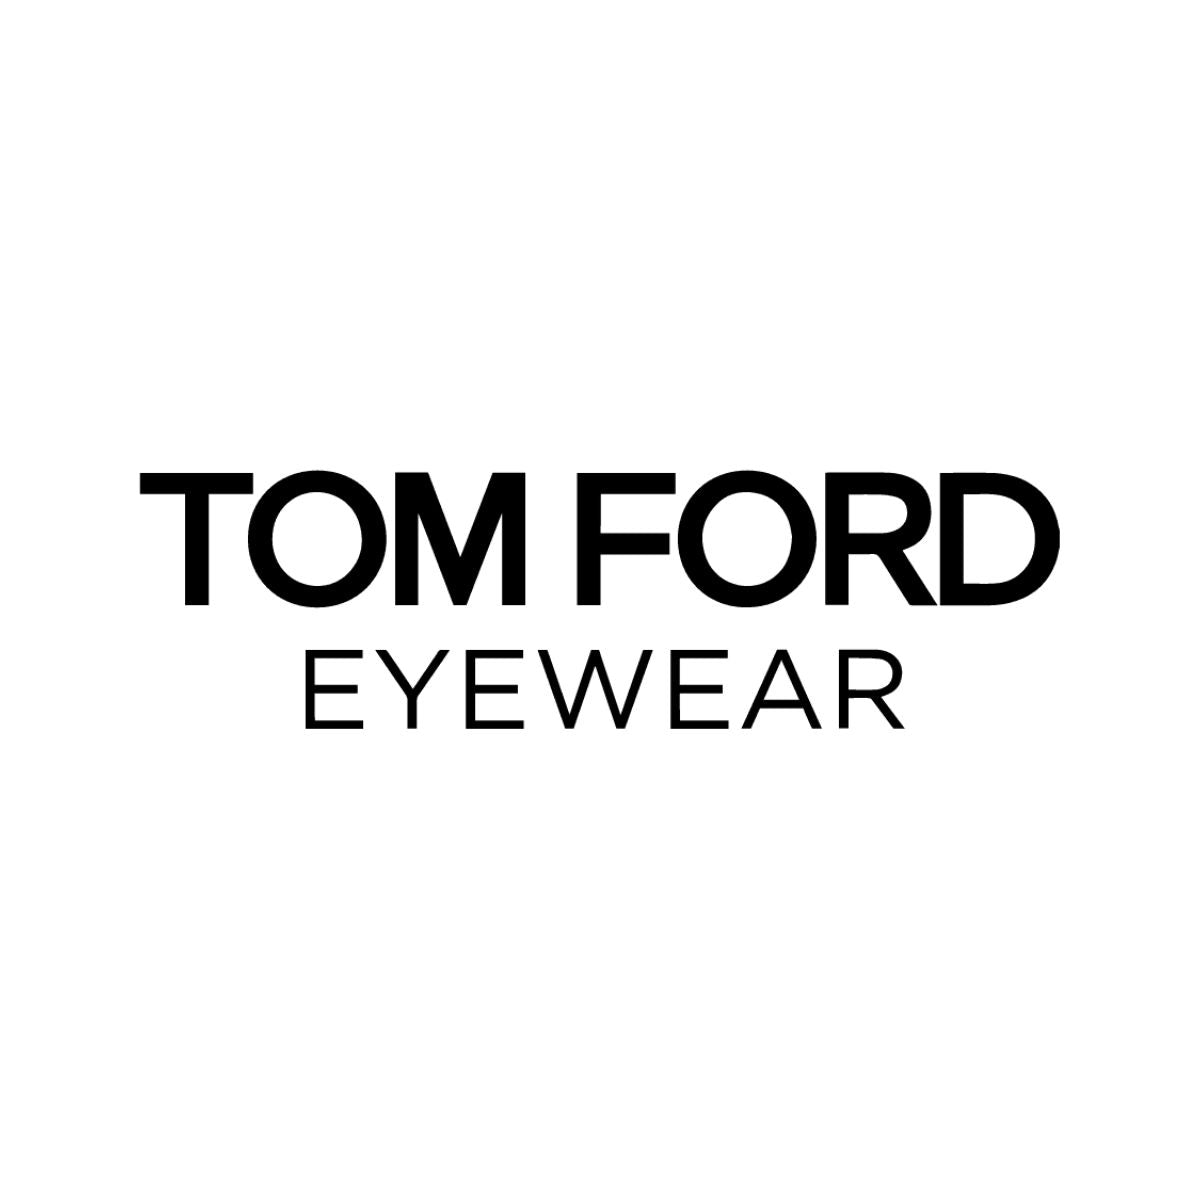 "Tom ford Premium eyewear brands sunglasses & optical frames and lenses at optorium"